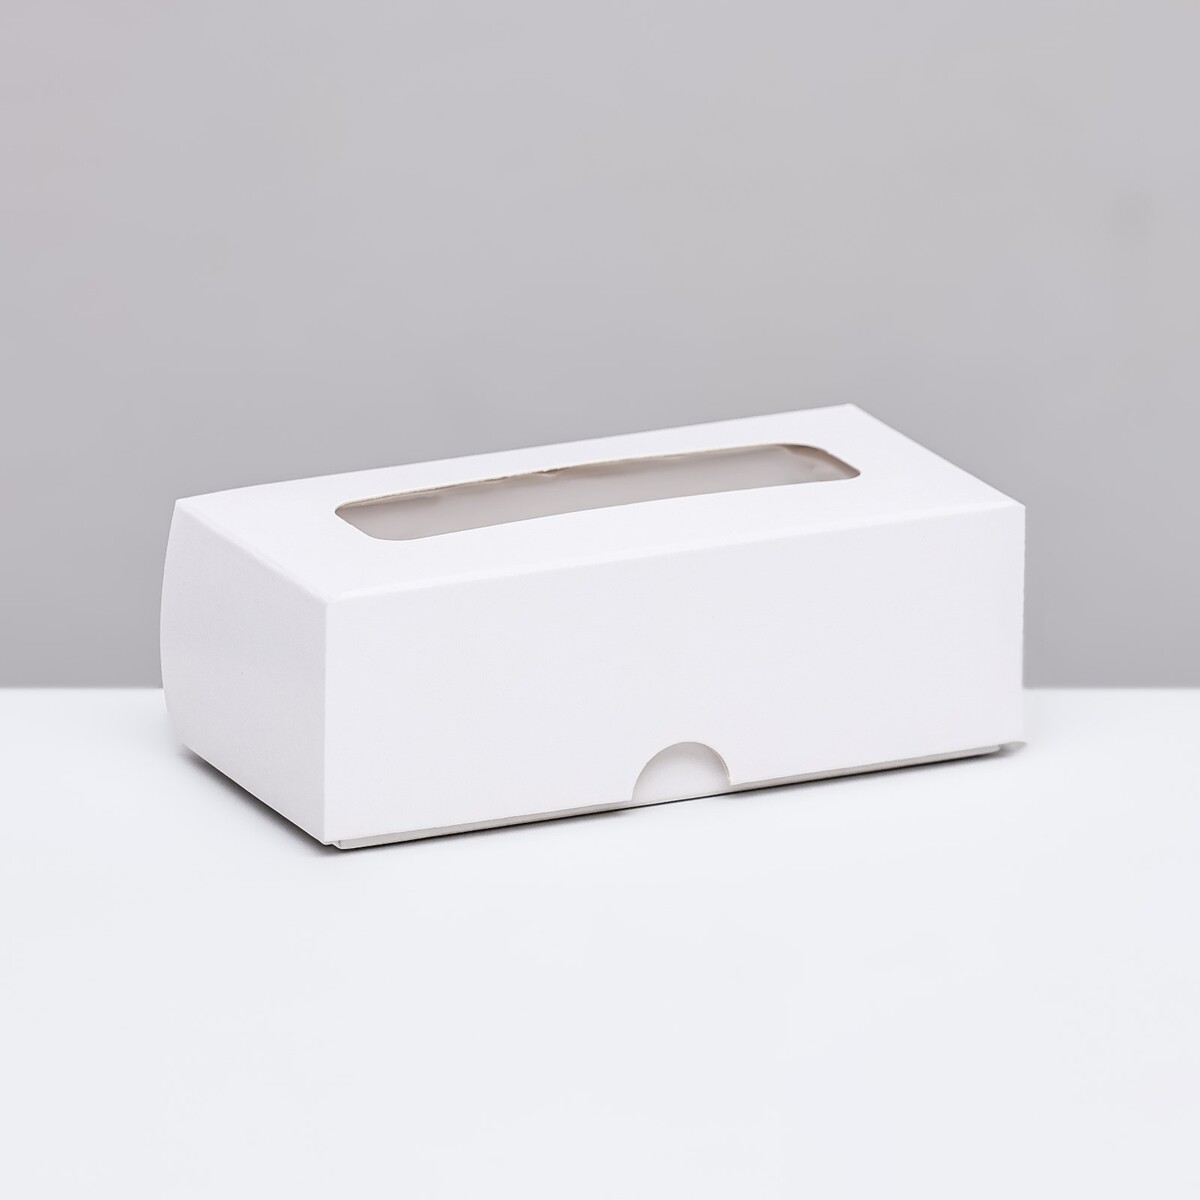 Коробка складная под 2 конфеты, белая, 5 х 10,5 х 3,5 см коробка складная под 10 конфет белая 9 8 х 22 х 3 5 см